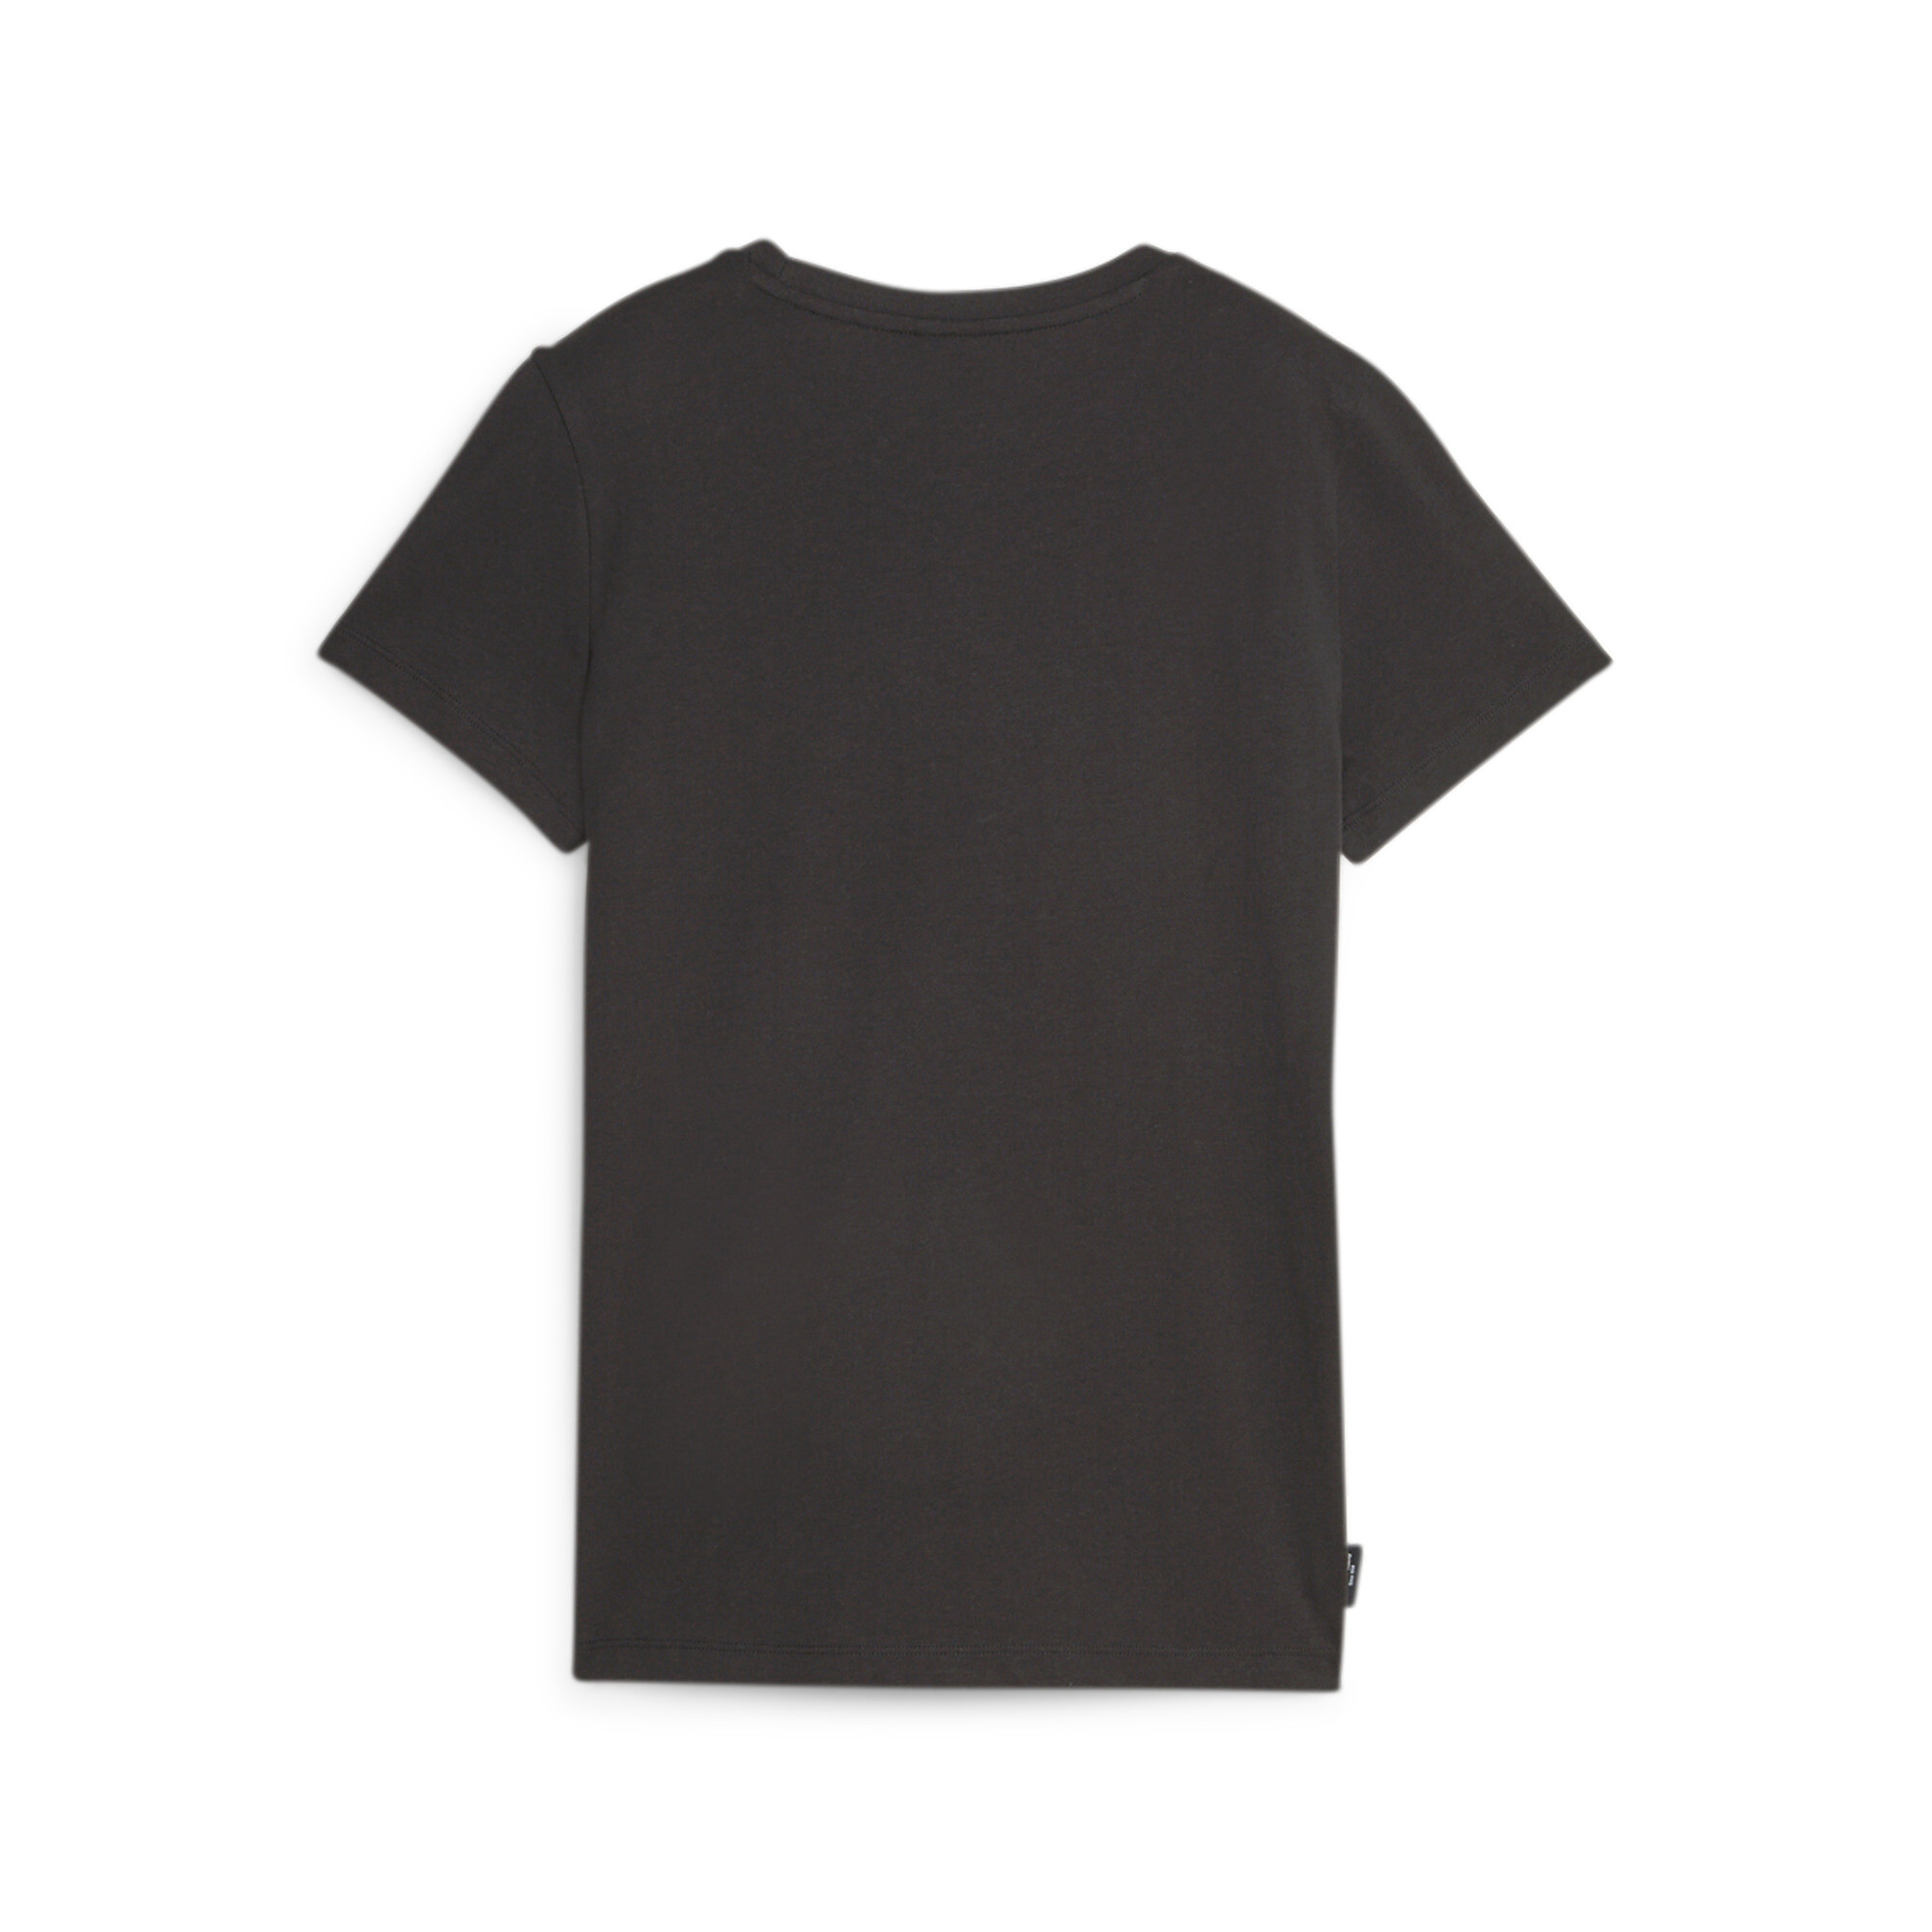 Women's Sportswear By PUMA Graphic T-Shirt In Black, Size XS